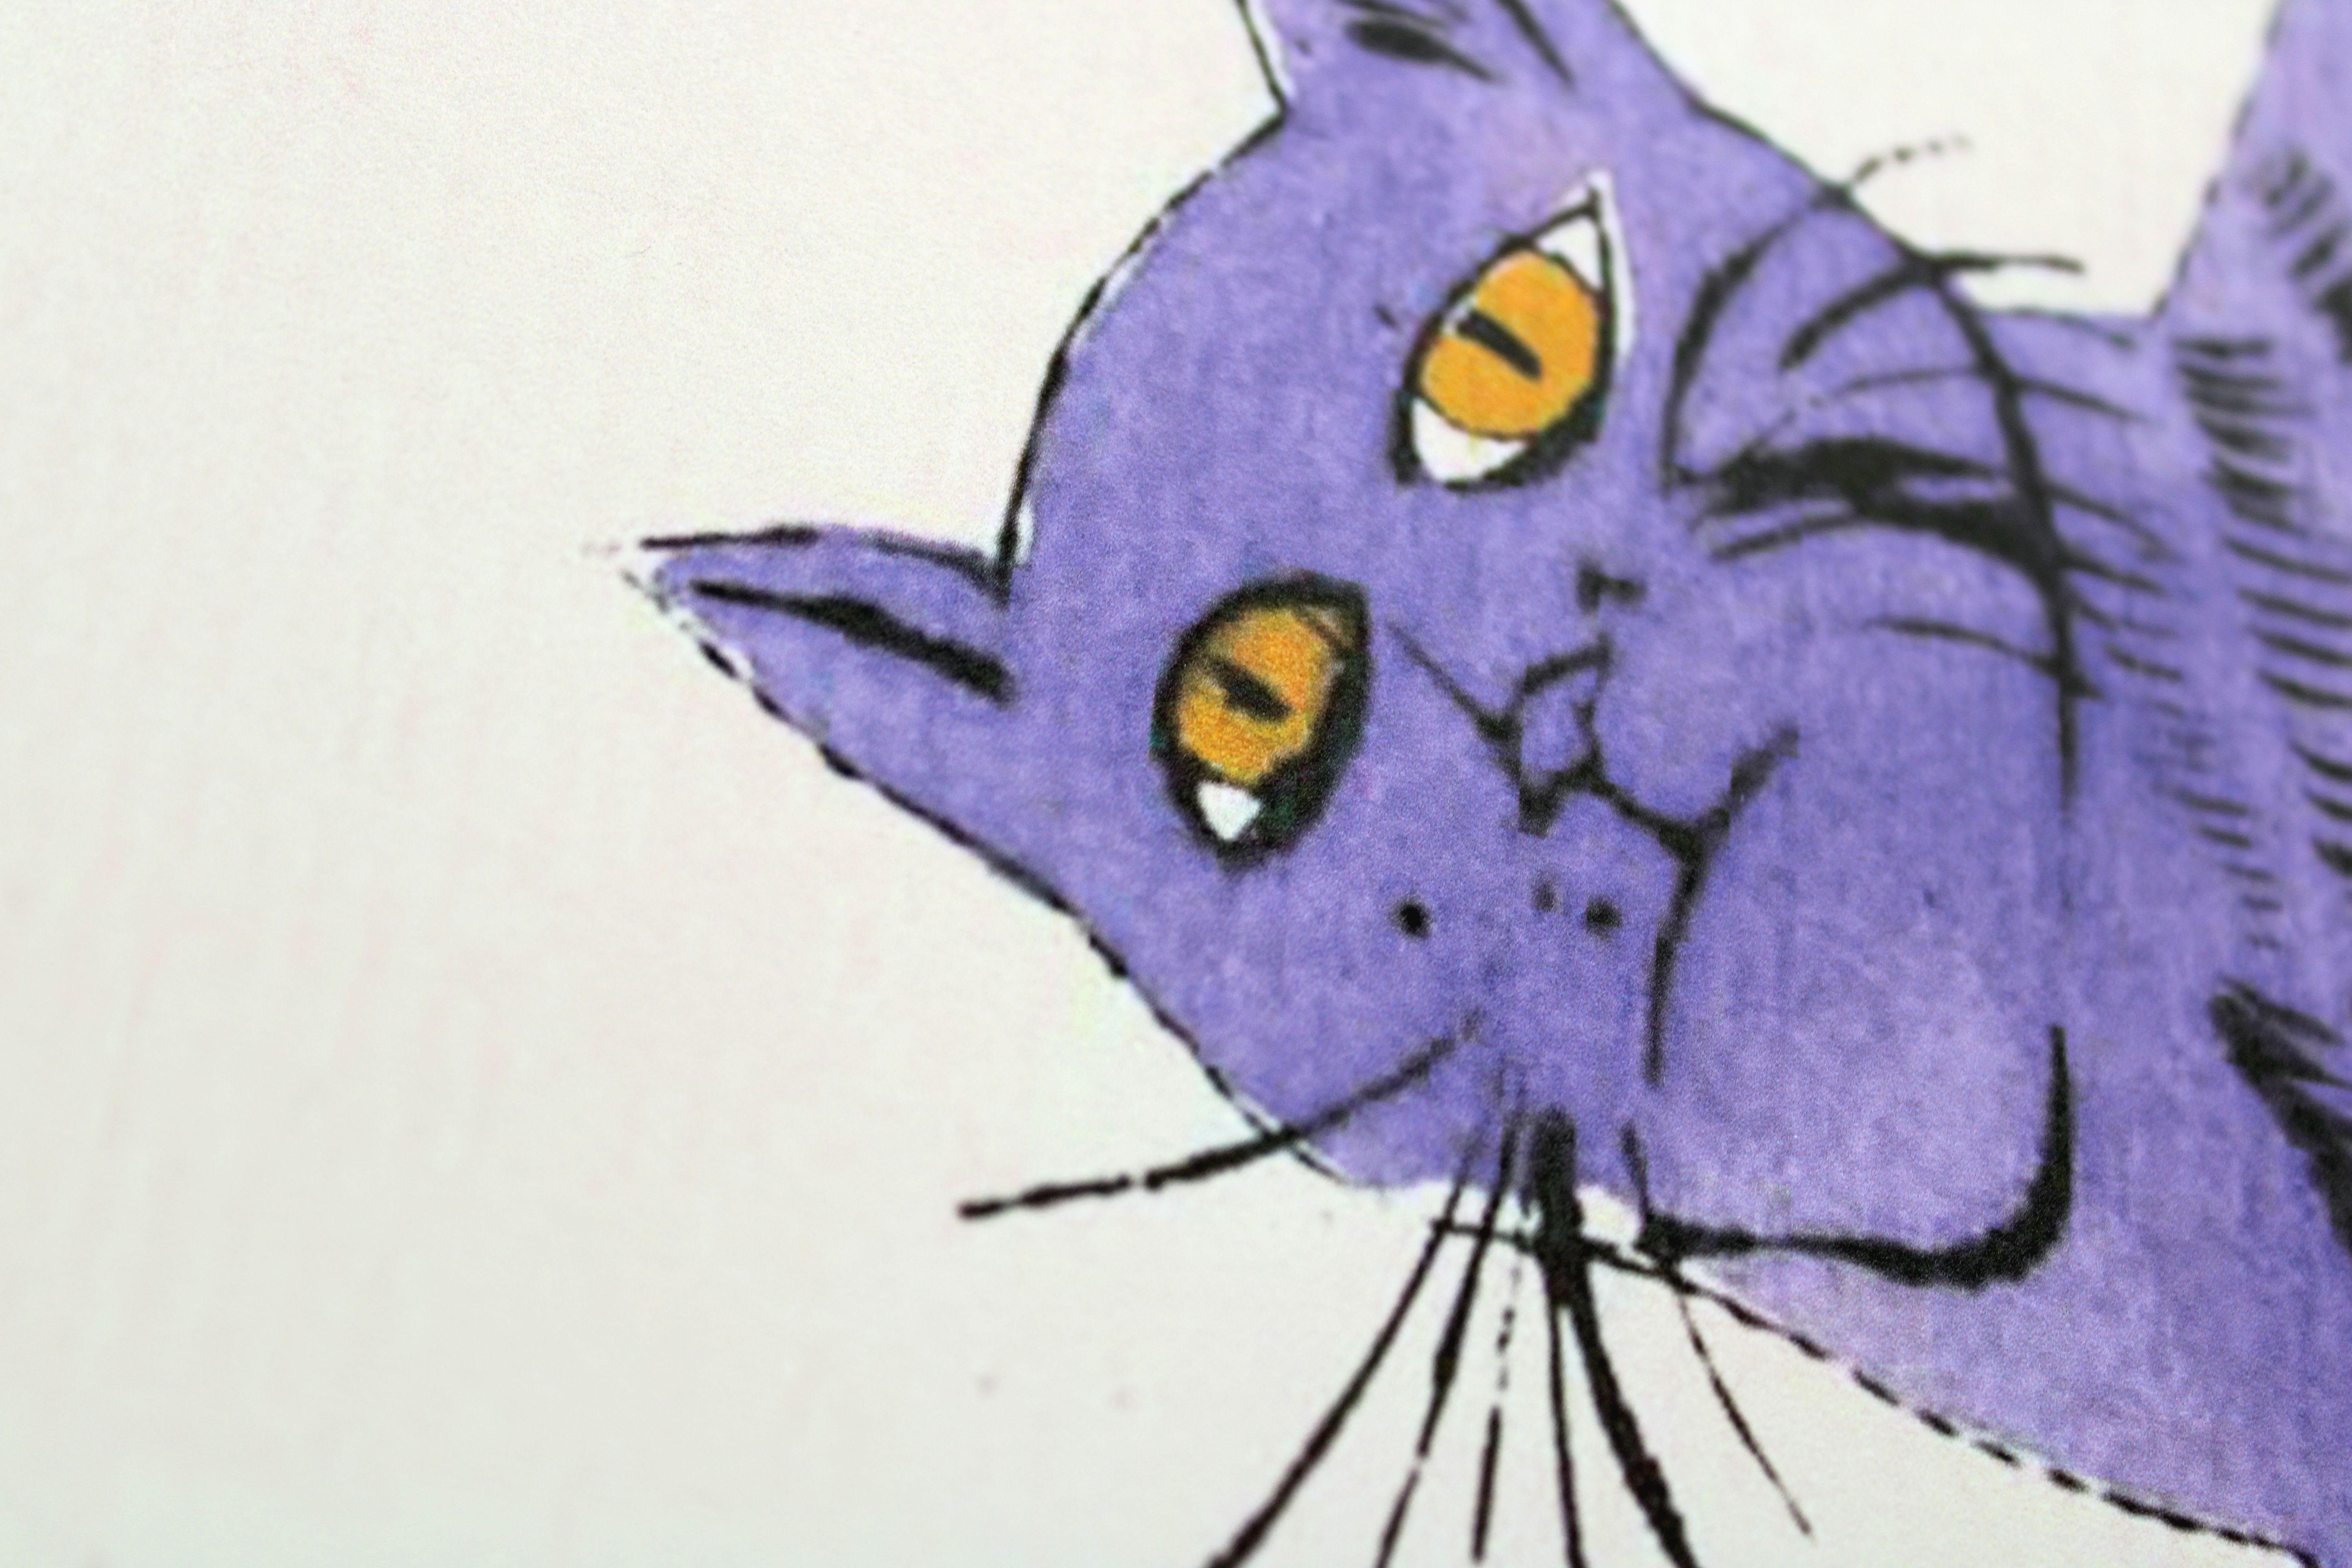 Lunar cat  61/100. Lithography, offset printing, imprint size 44x28, 5 cm 6